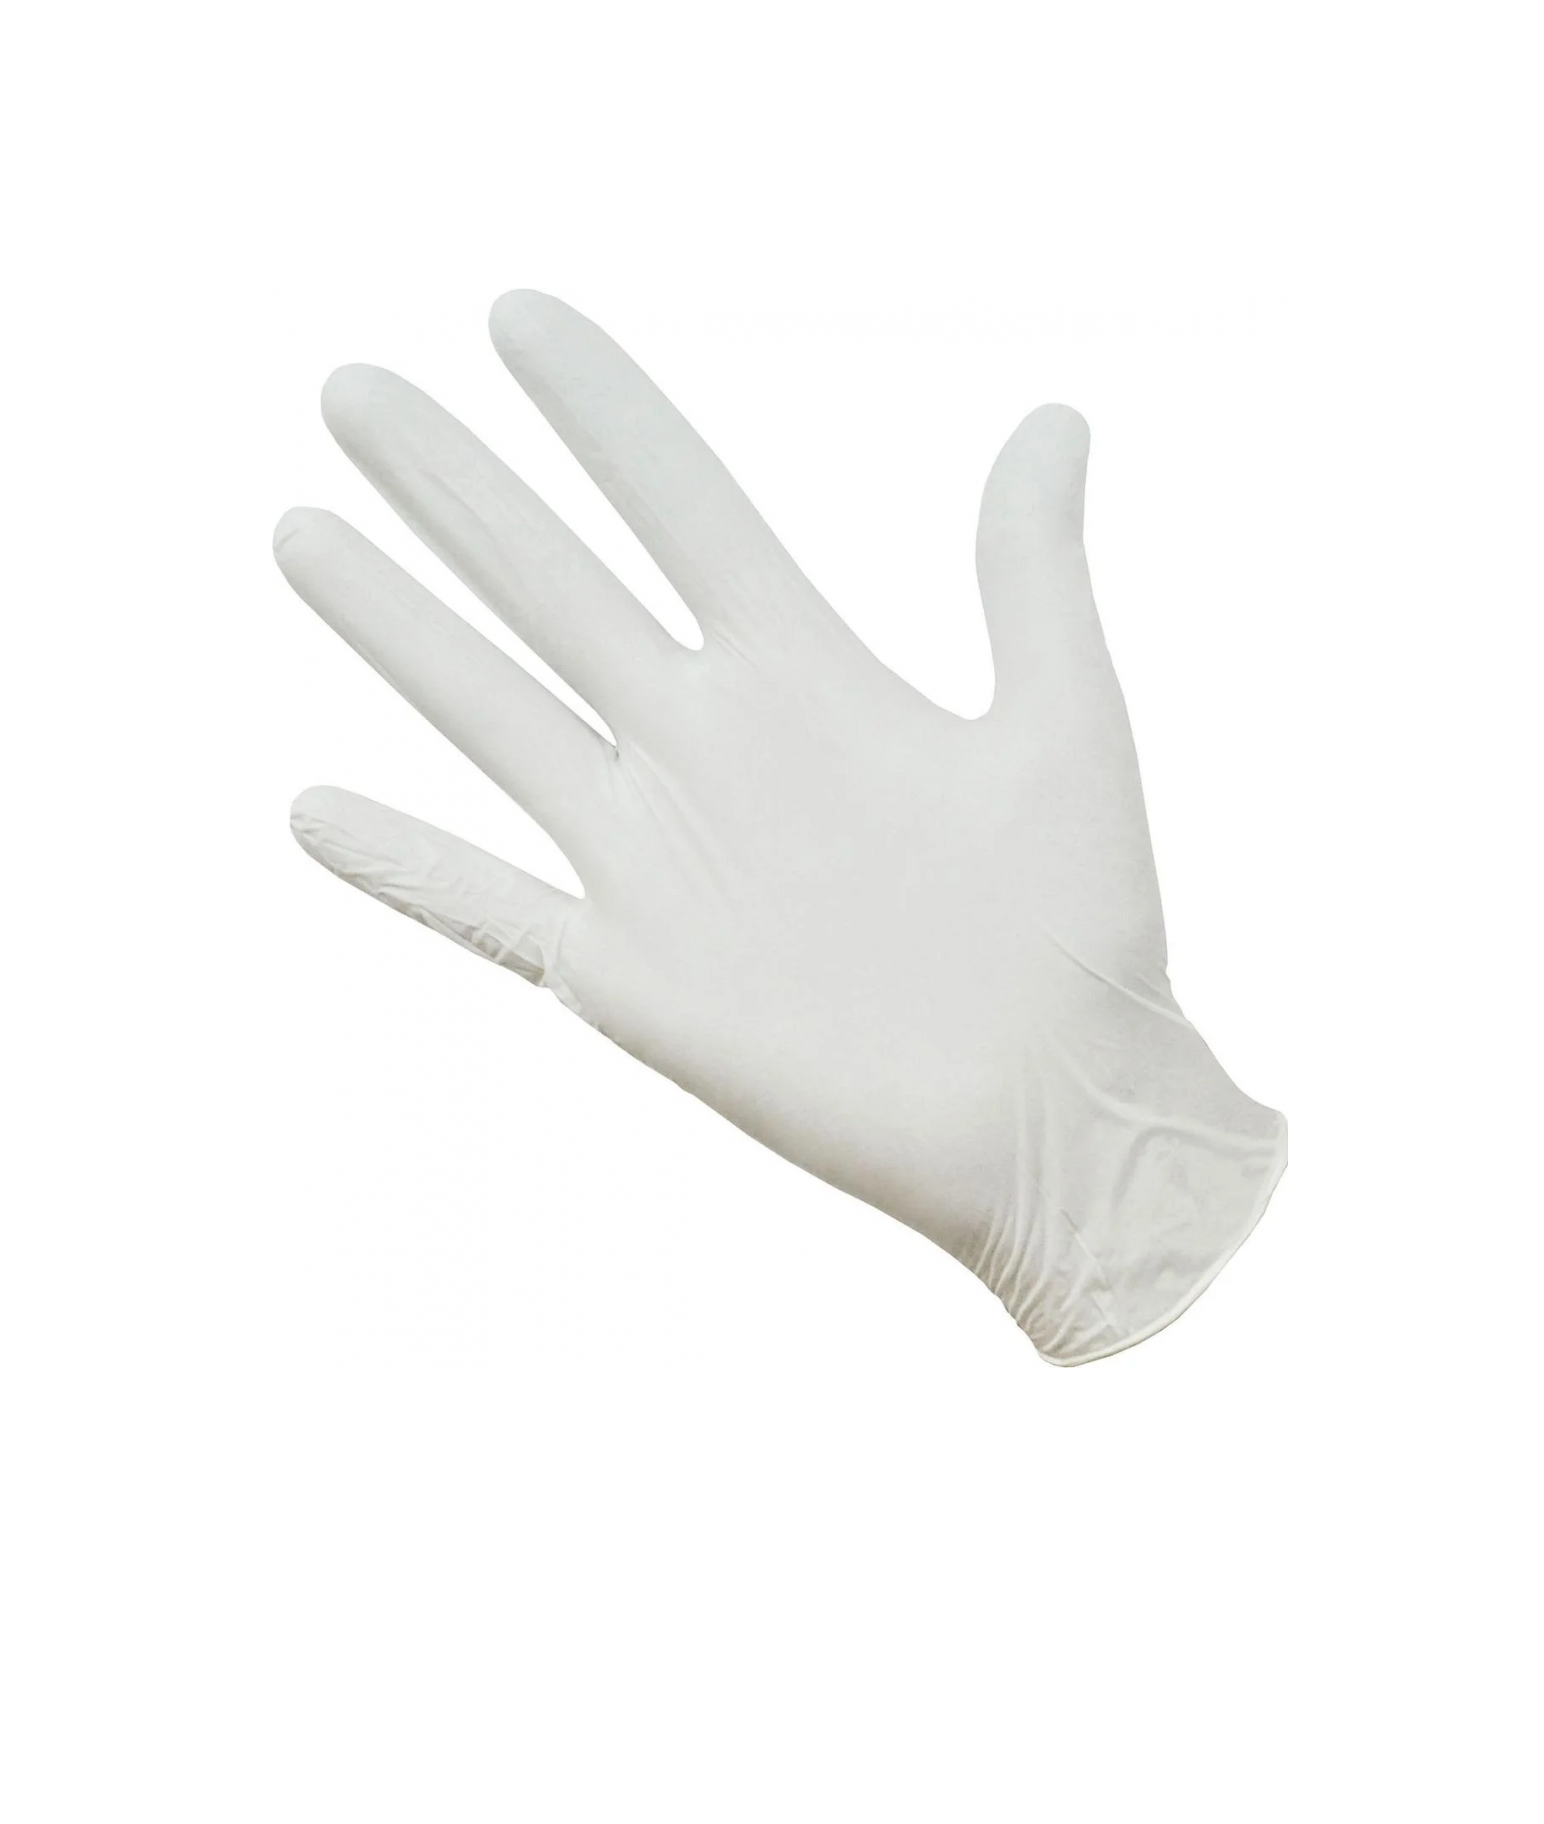 Перчатки Gward,белые, нитриловые, Deltagrip Ultra, LS, размер 7,S, 50пар led xp 5725 6m 230v s белые led прозрачный пр